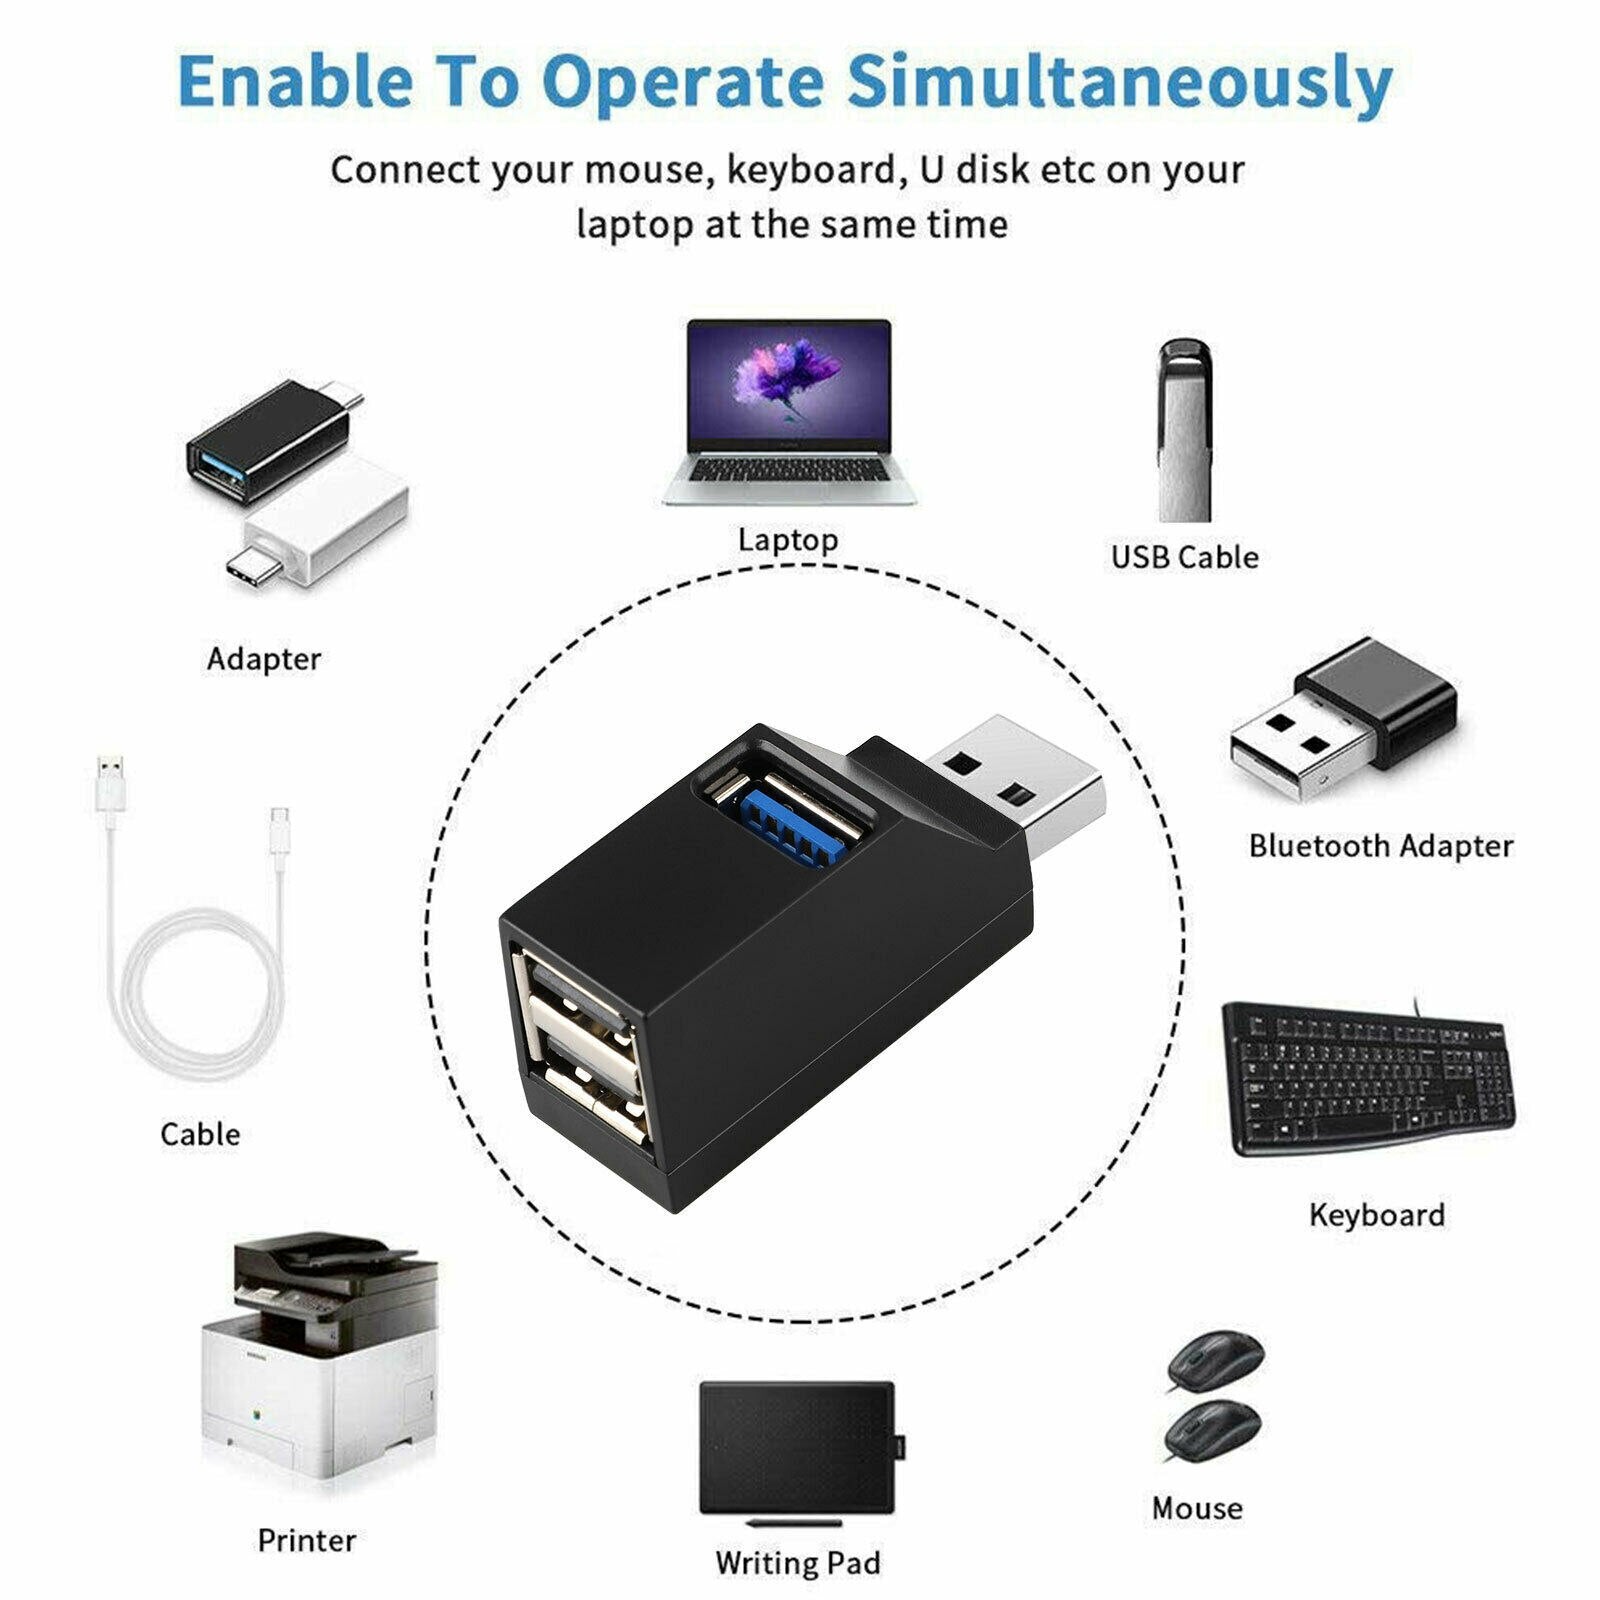 USB 3.0 /2.0 HUB Adapter Extender Mini Splitter 3 Ports High Speed U Disk Reader for PC Laptop Macbook Mobile Phone Accessories